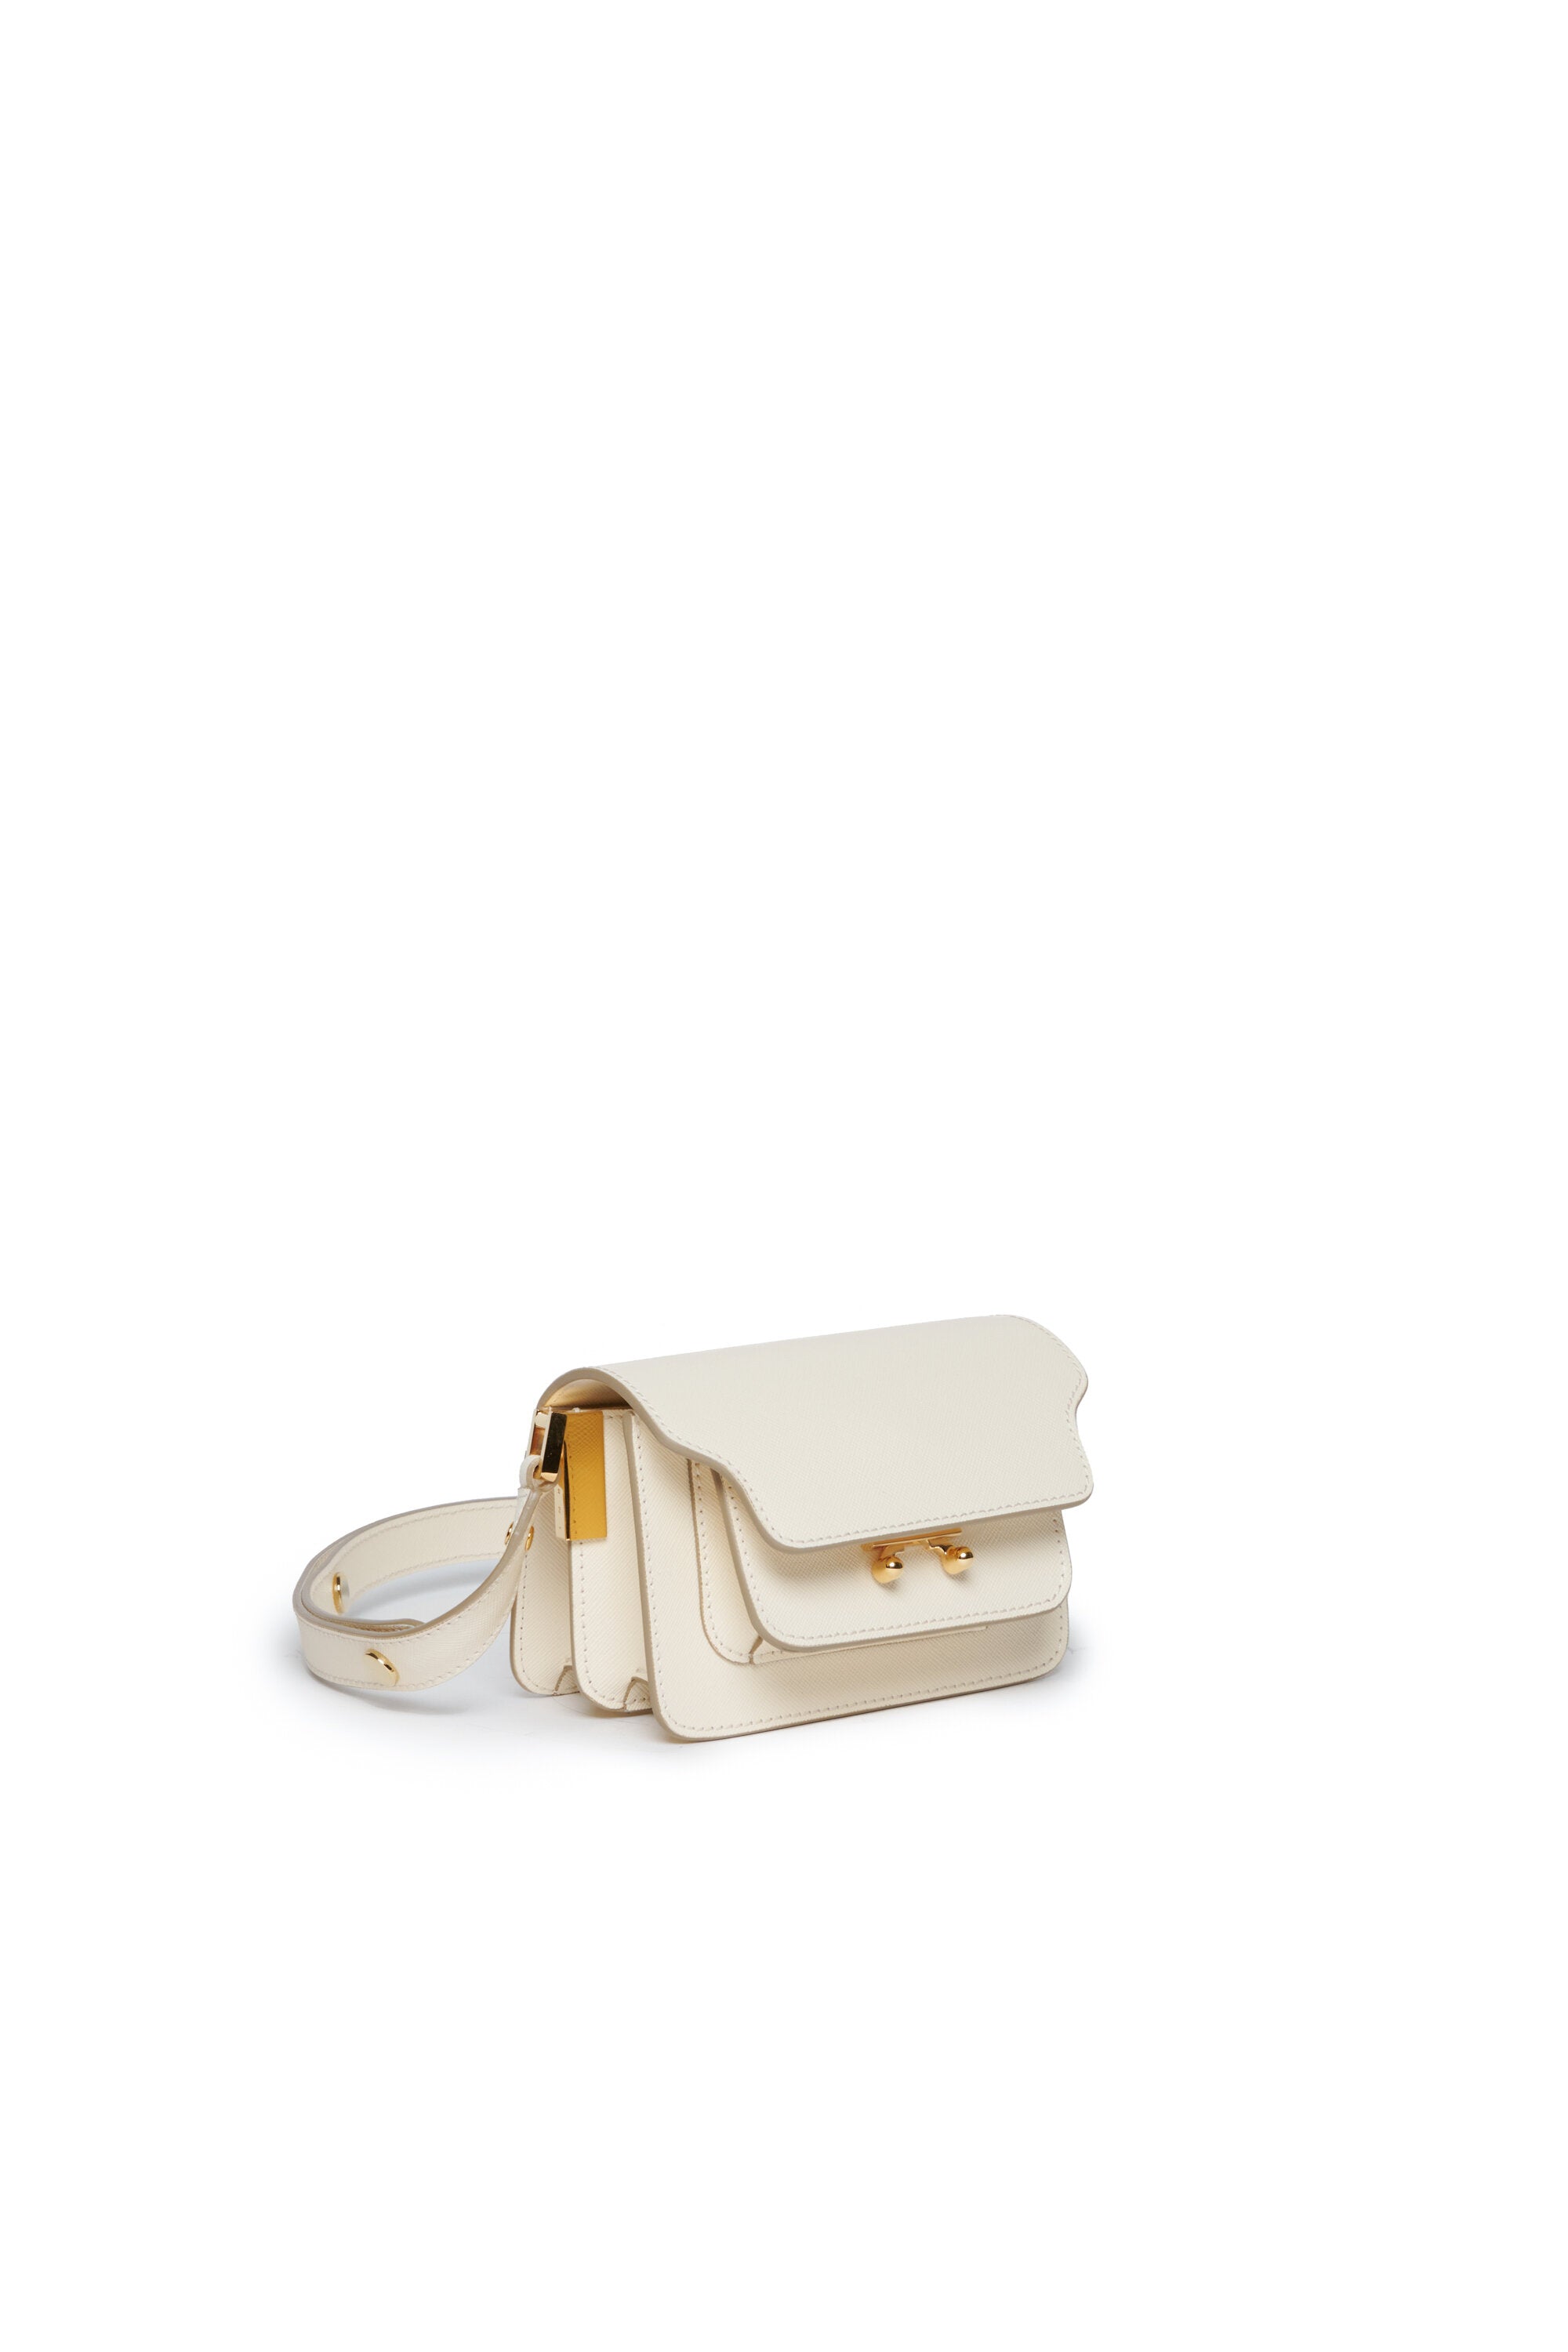 Marni Off-White Mini Soft Trunk Bag Marni